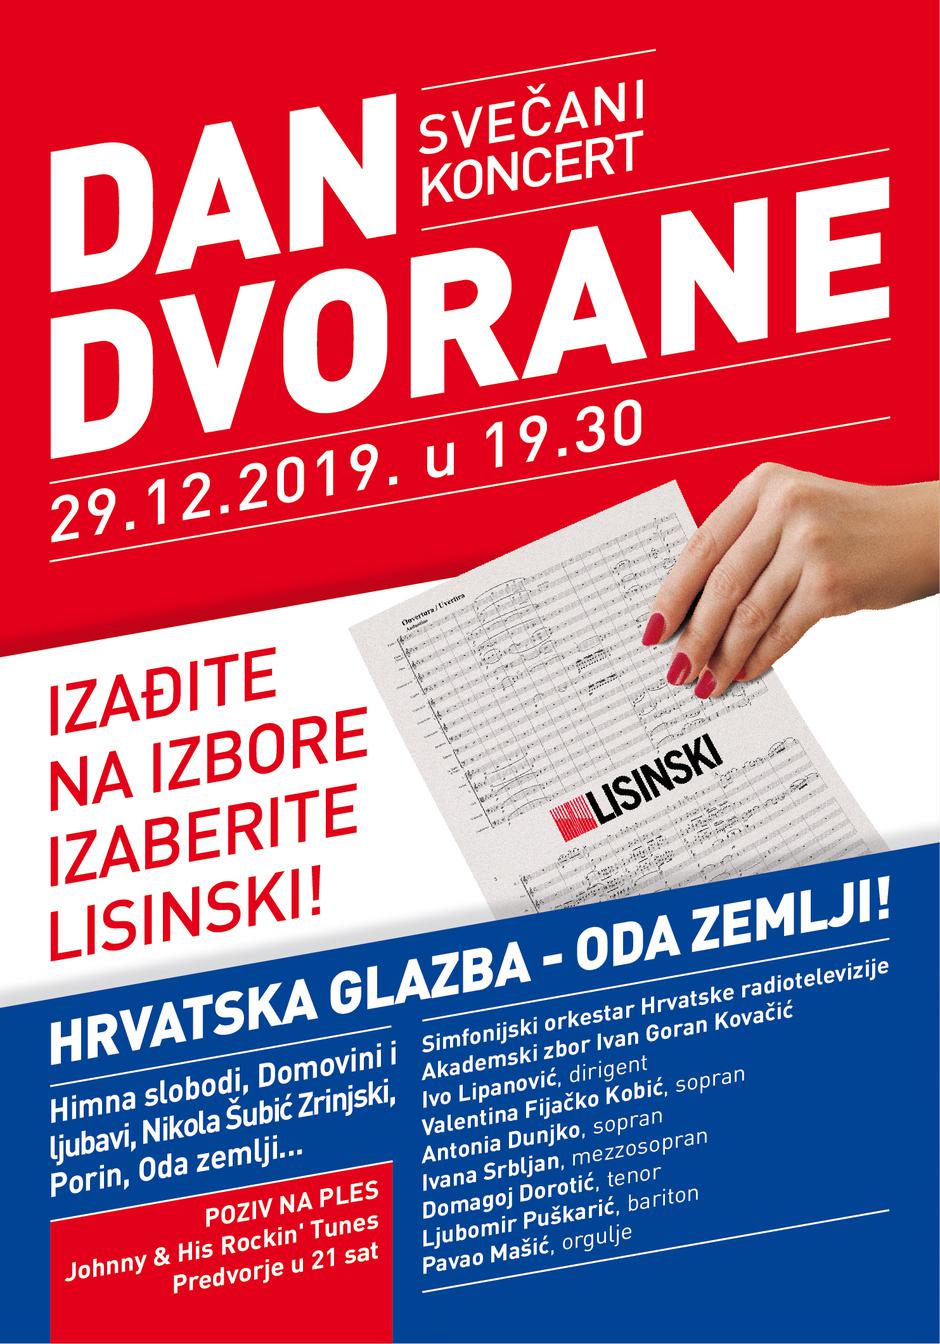 Večernji te vodi u Lisinski! Osvoji karte za Dan Dvorane s hrvatskom glazbom!